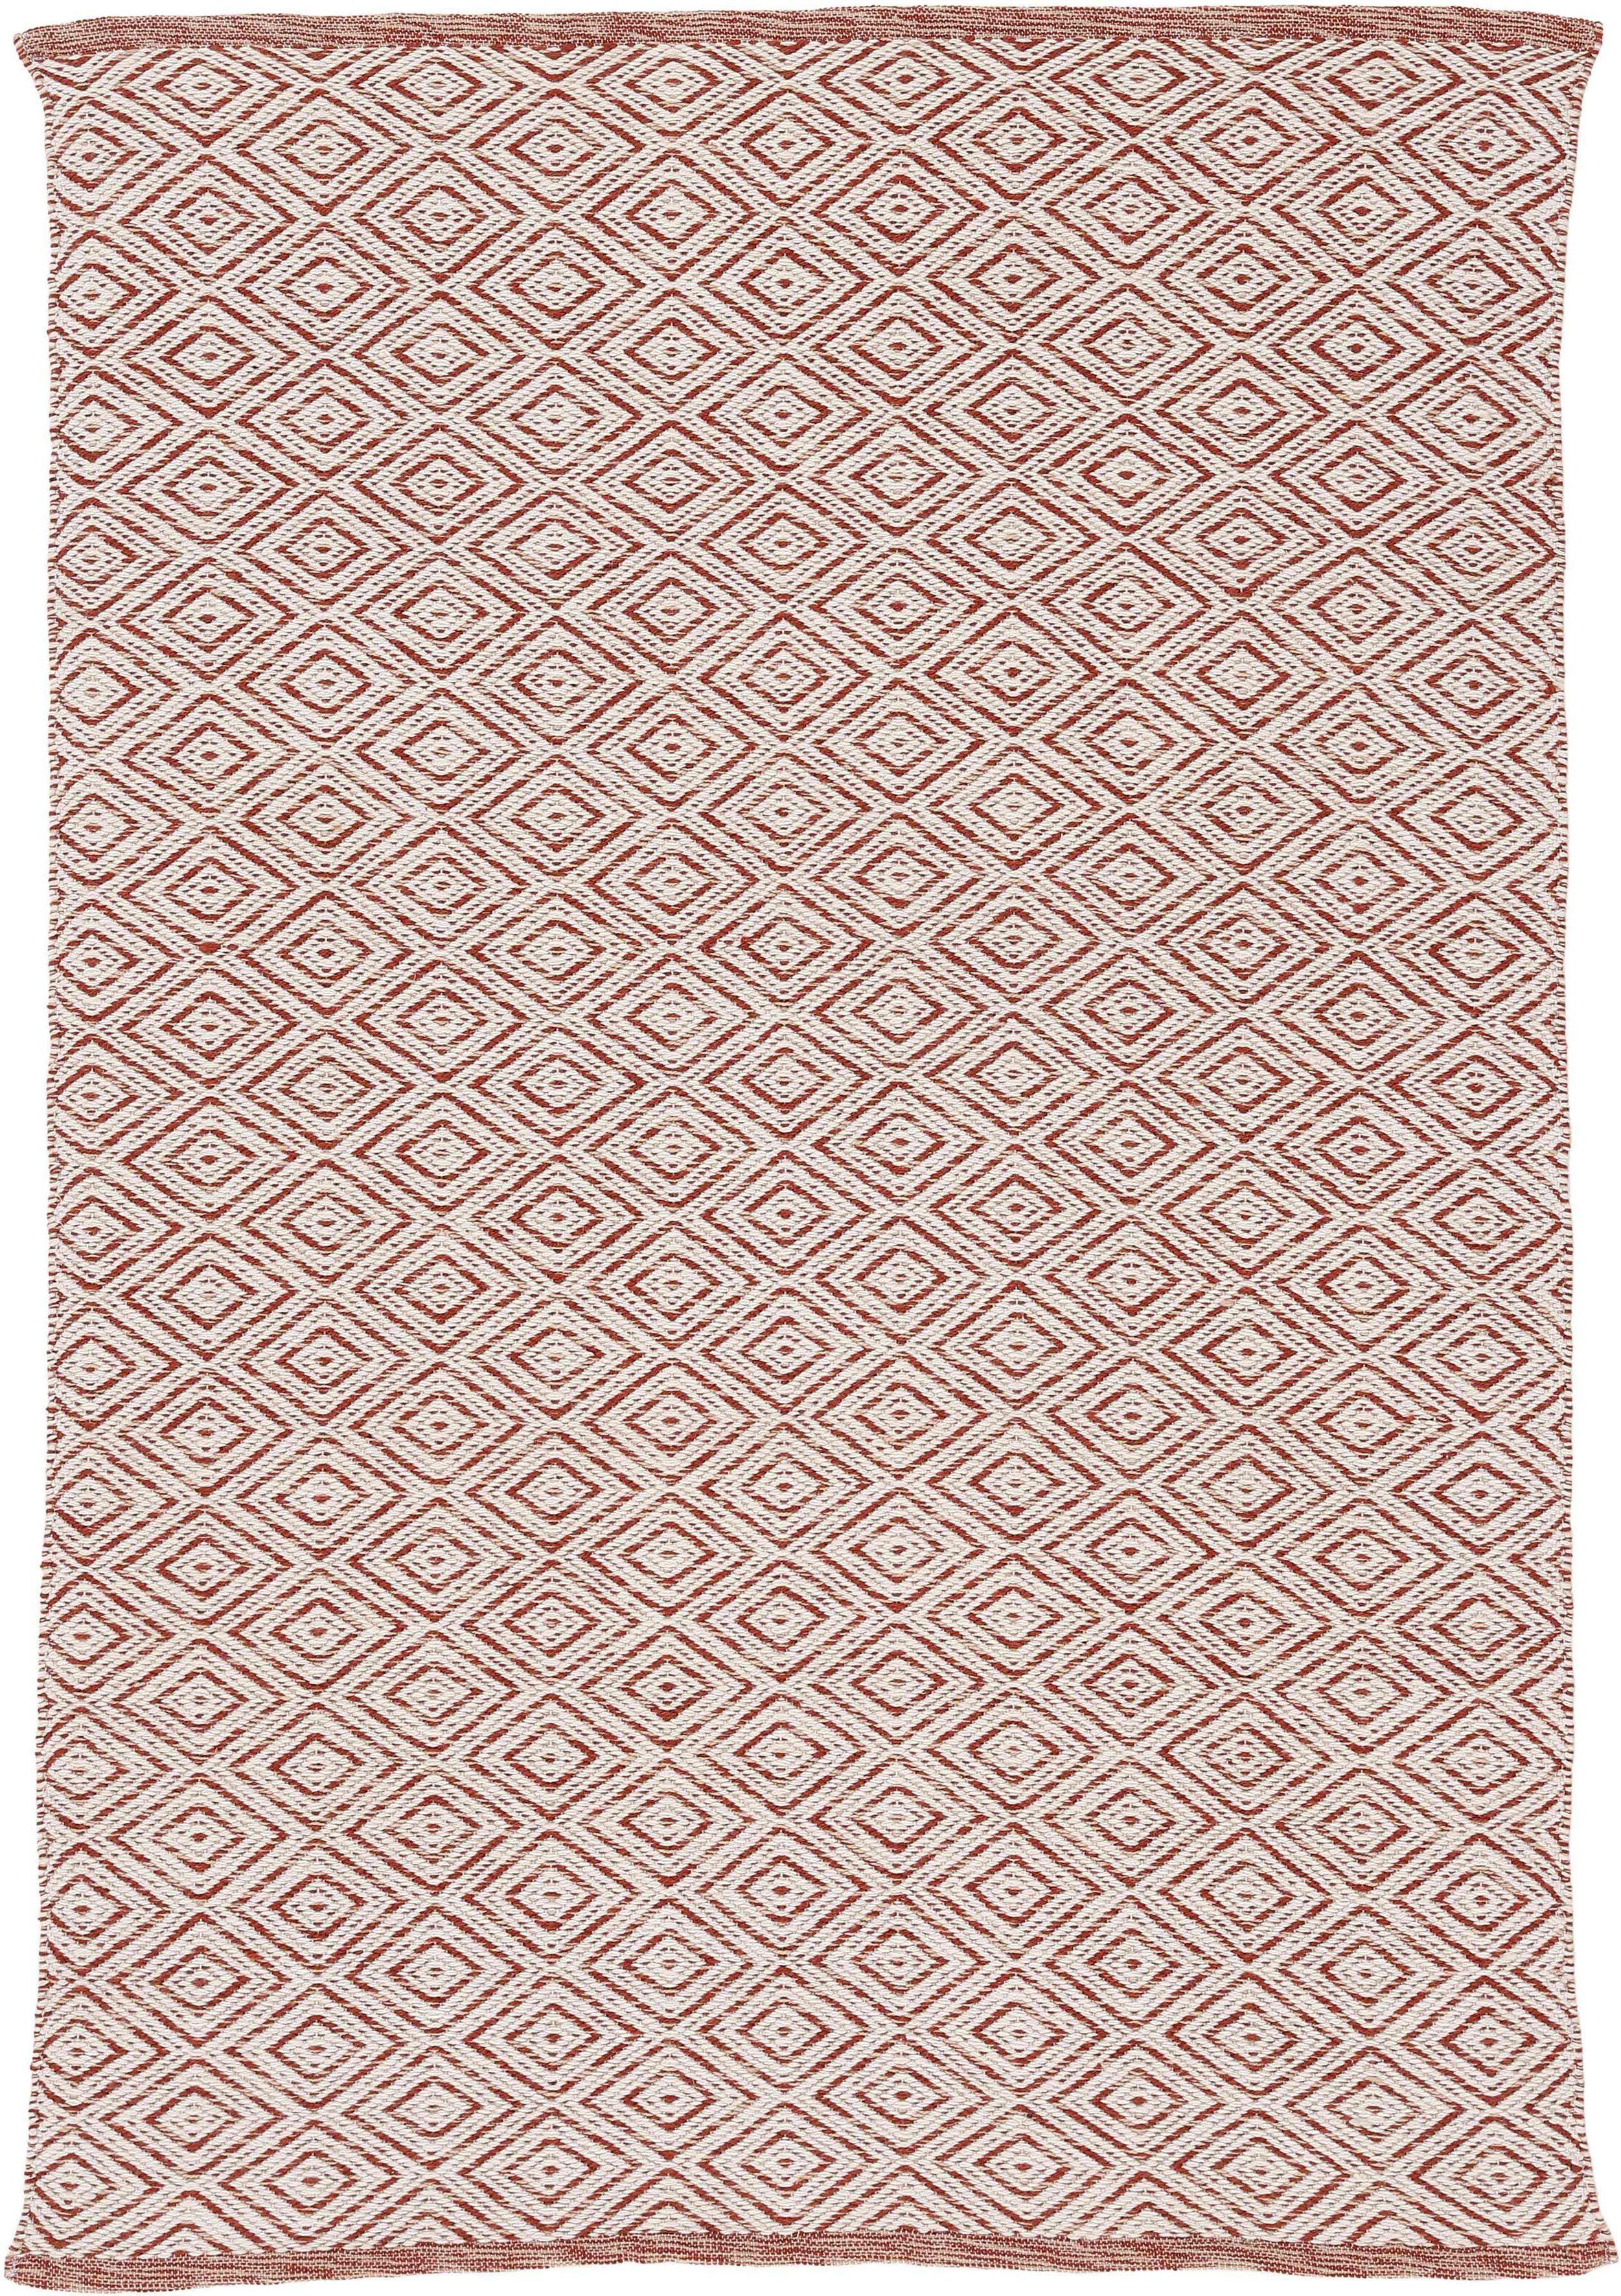 Teppich Frida 200, carpetfine, rechteckig, Höhe: 7 mm, Wendeteppich, 100% recyceltem Material (PET), Flachgewebe, Sisal Optik orange